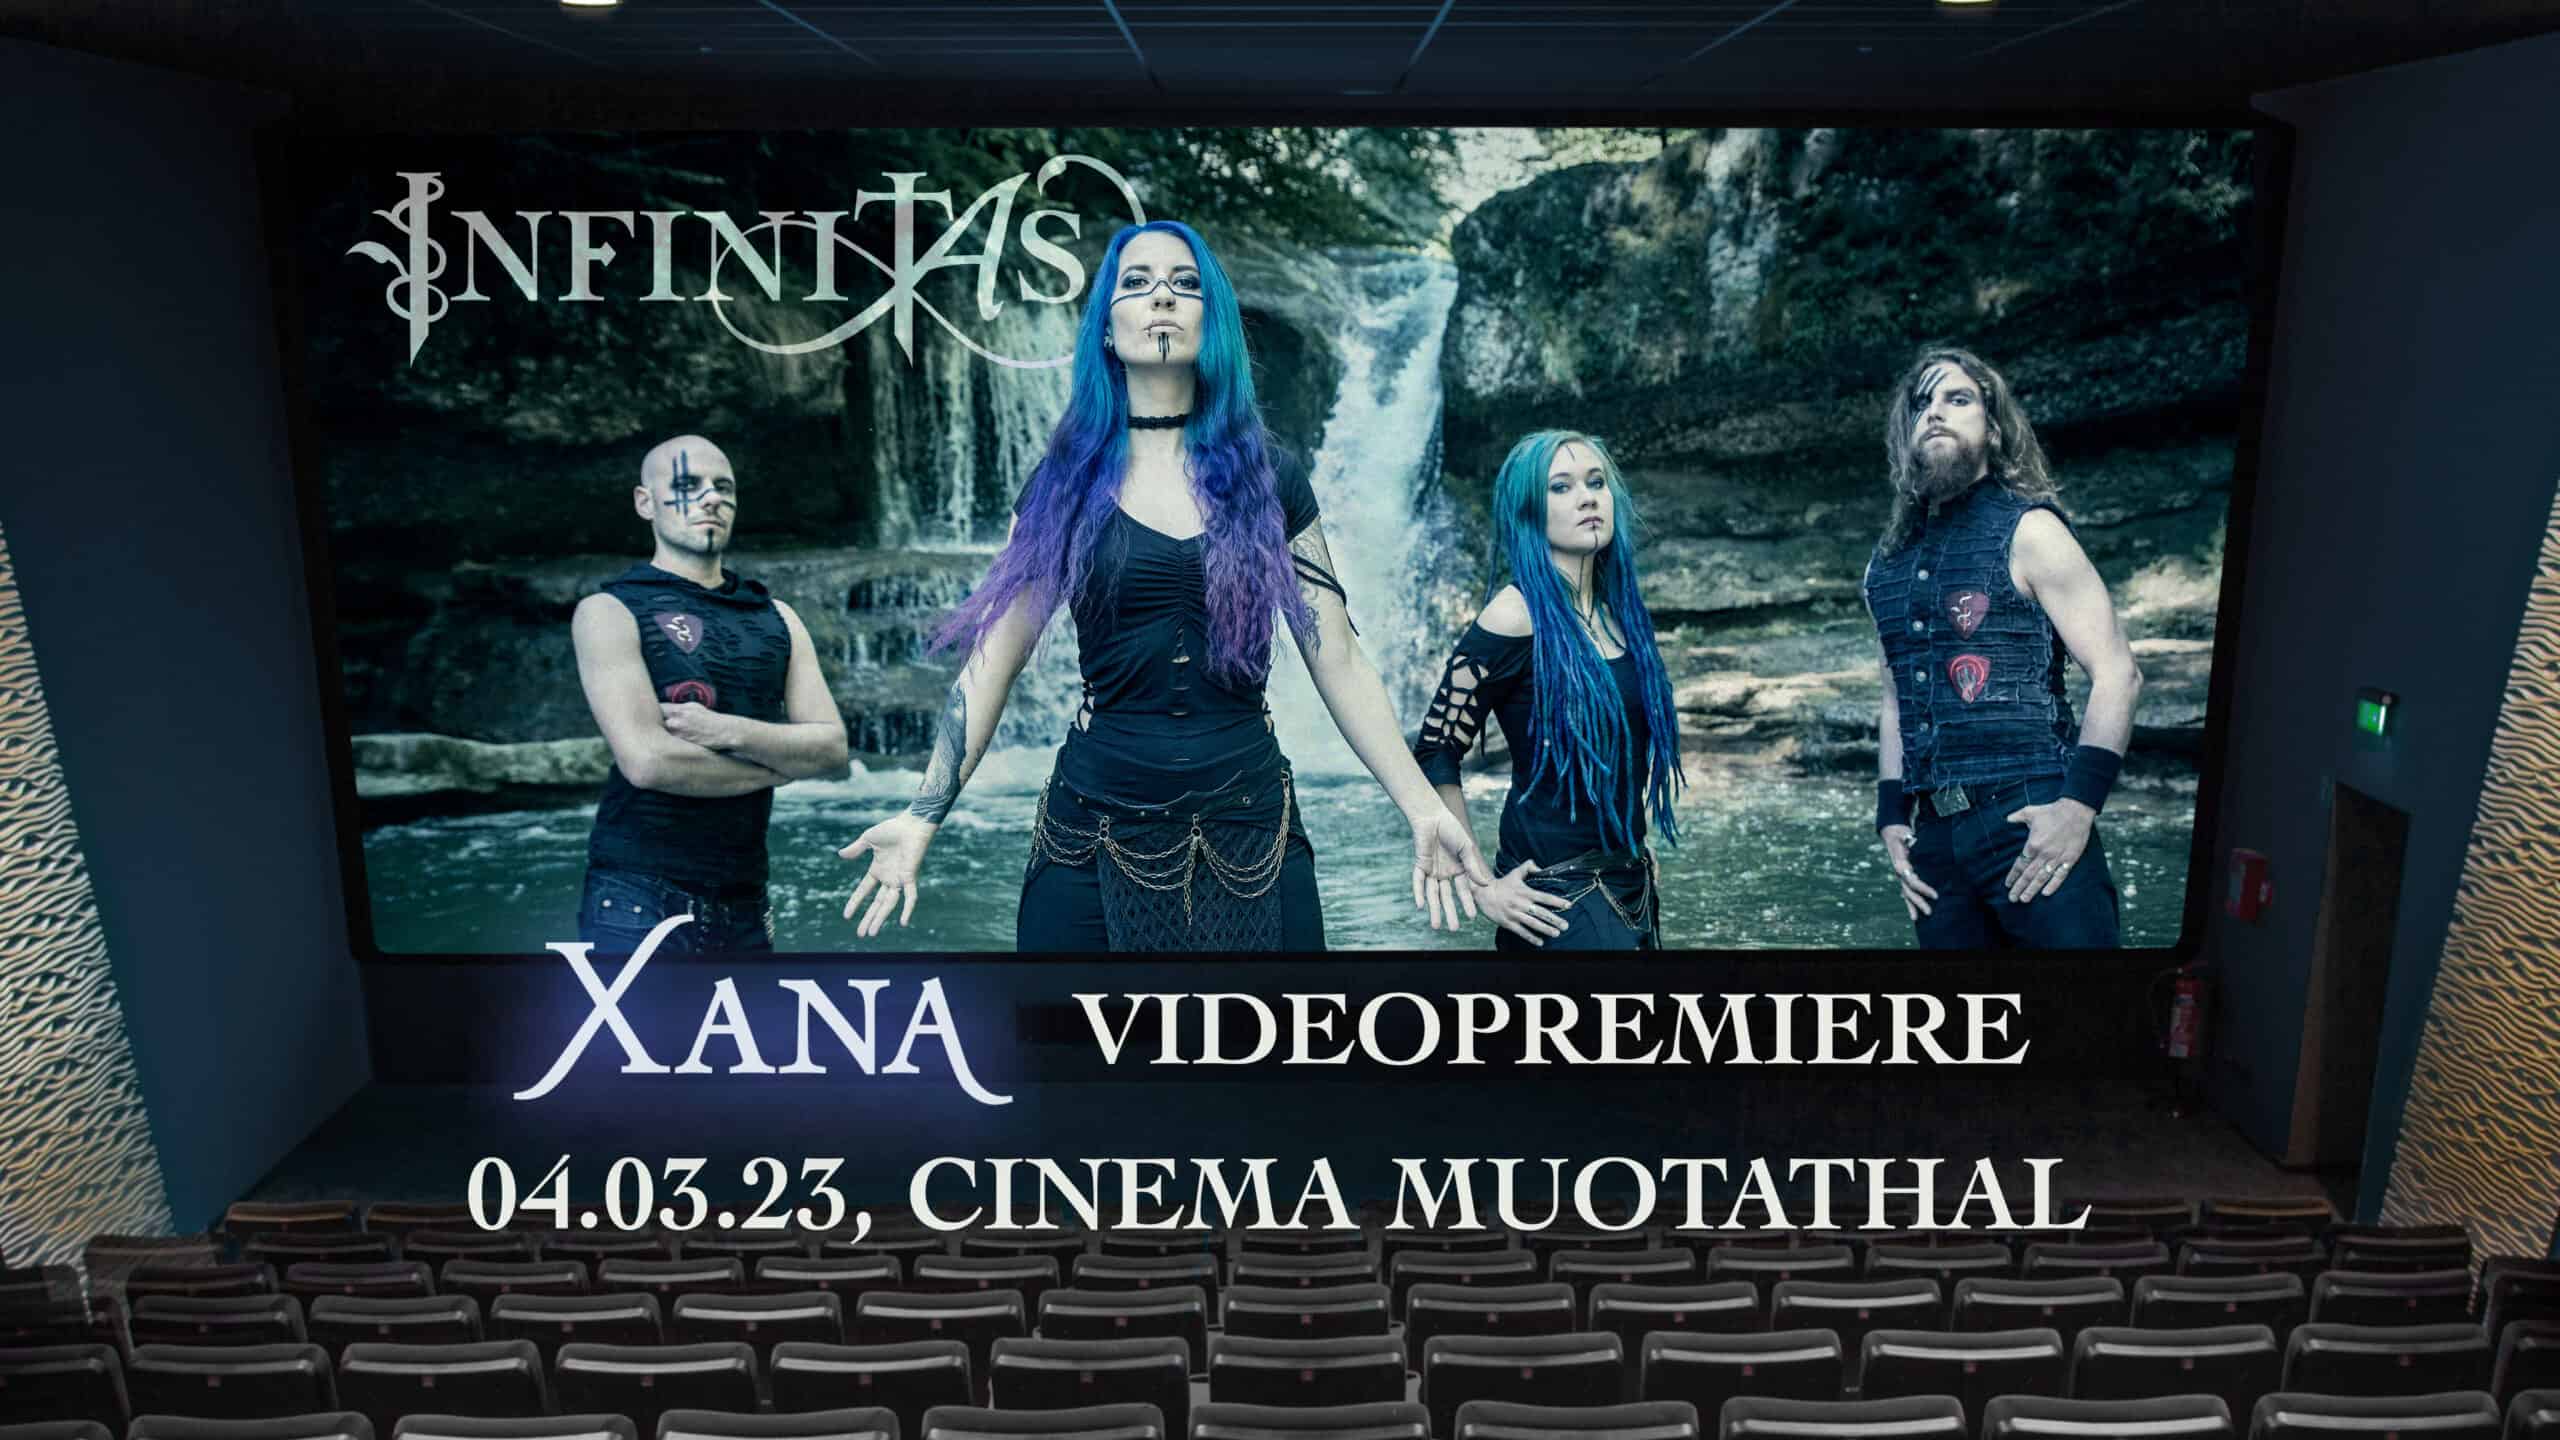 Xana Video Premiere